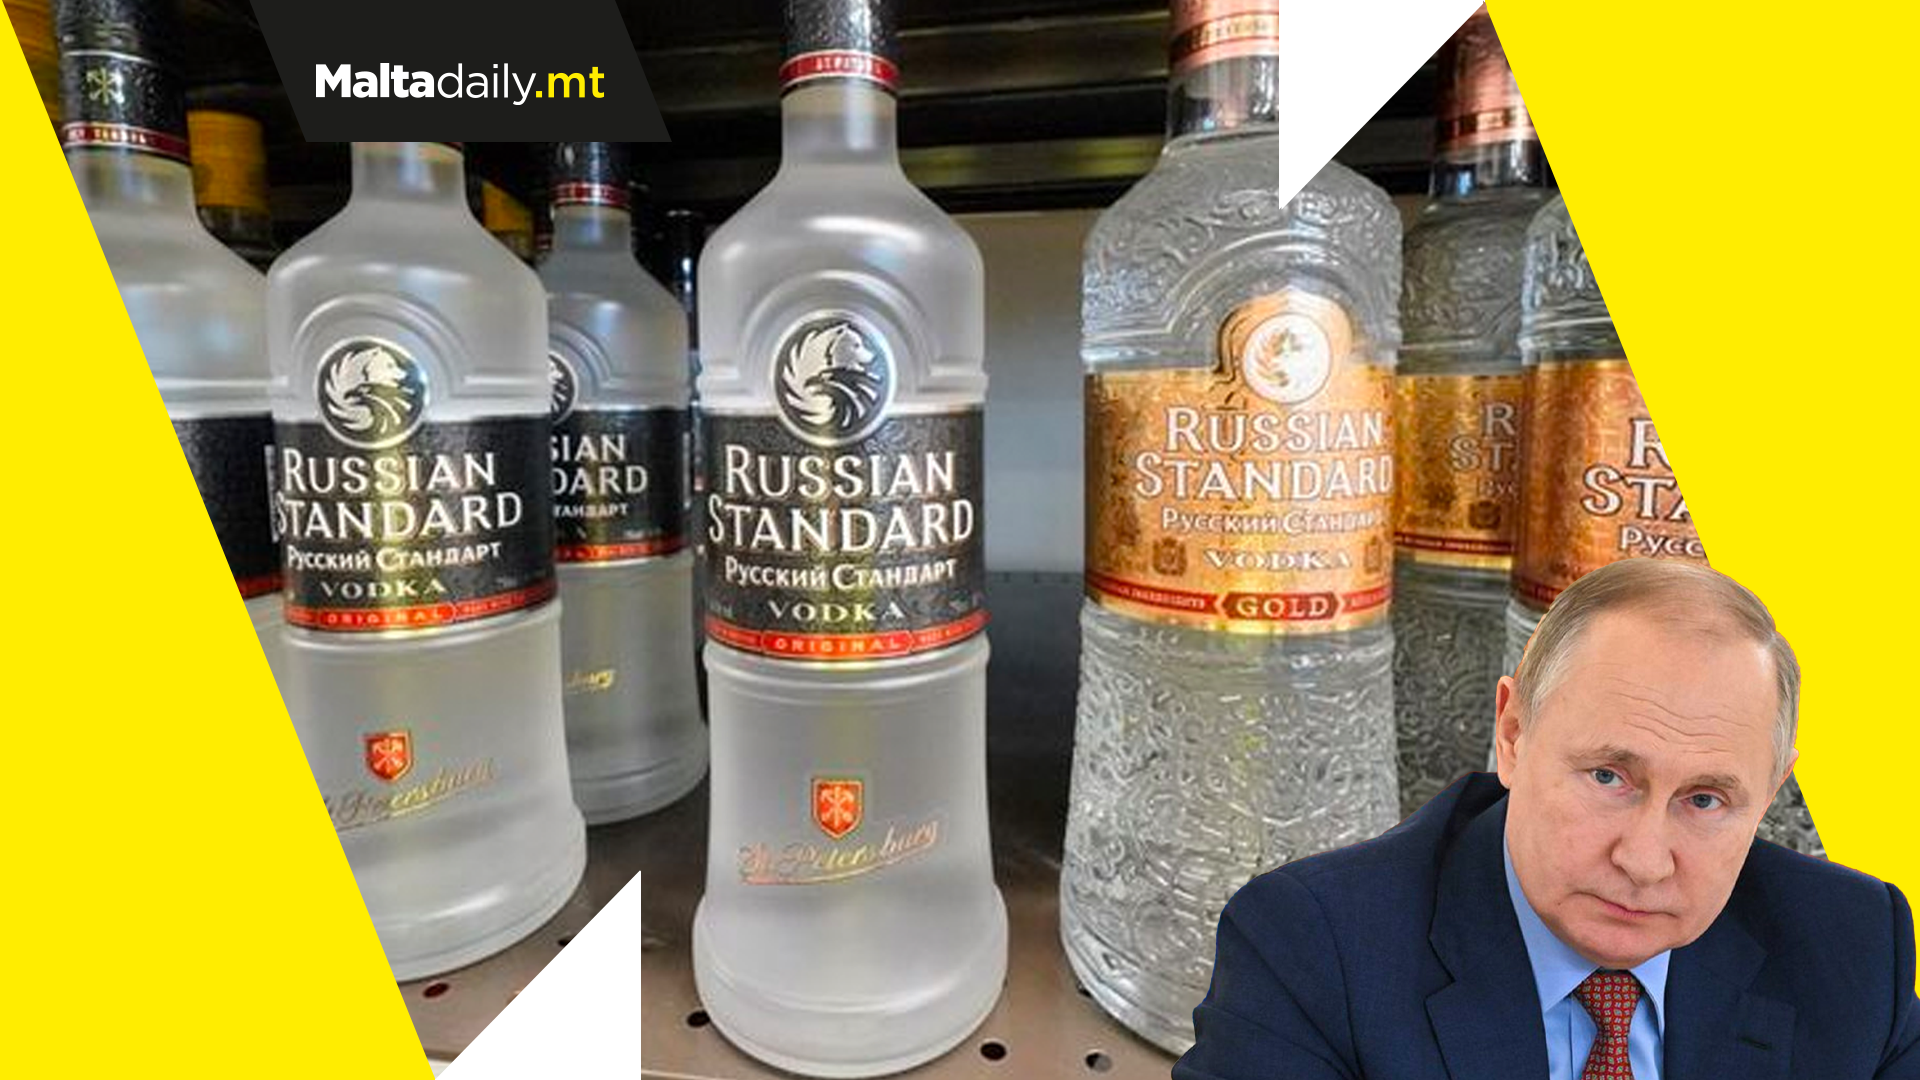 Supermarkets world-wide removing Russian vodka brands over invasion